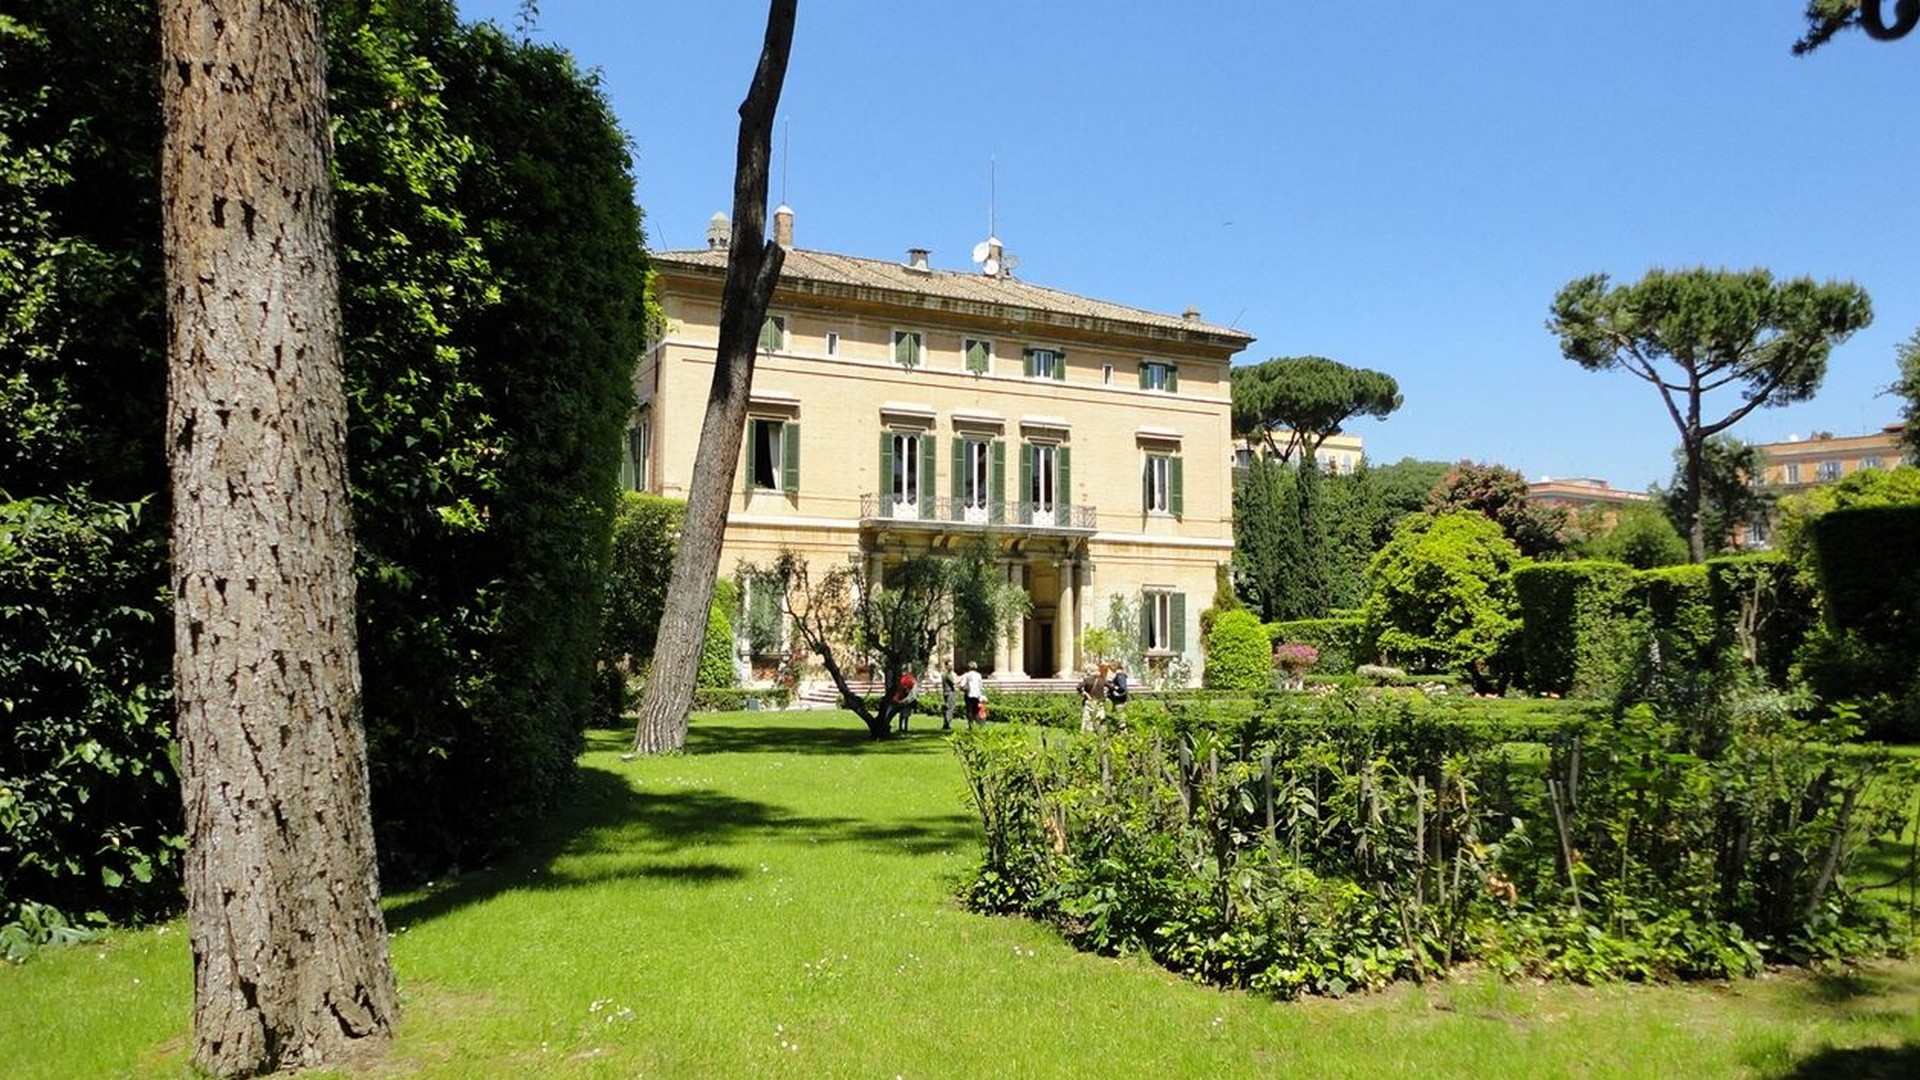 La villa Bonaparte est le siège de l'ambassade de France près le Saint-Siège | Wikimedia commons 